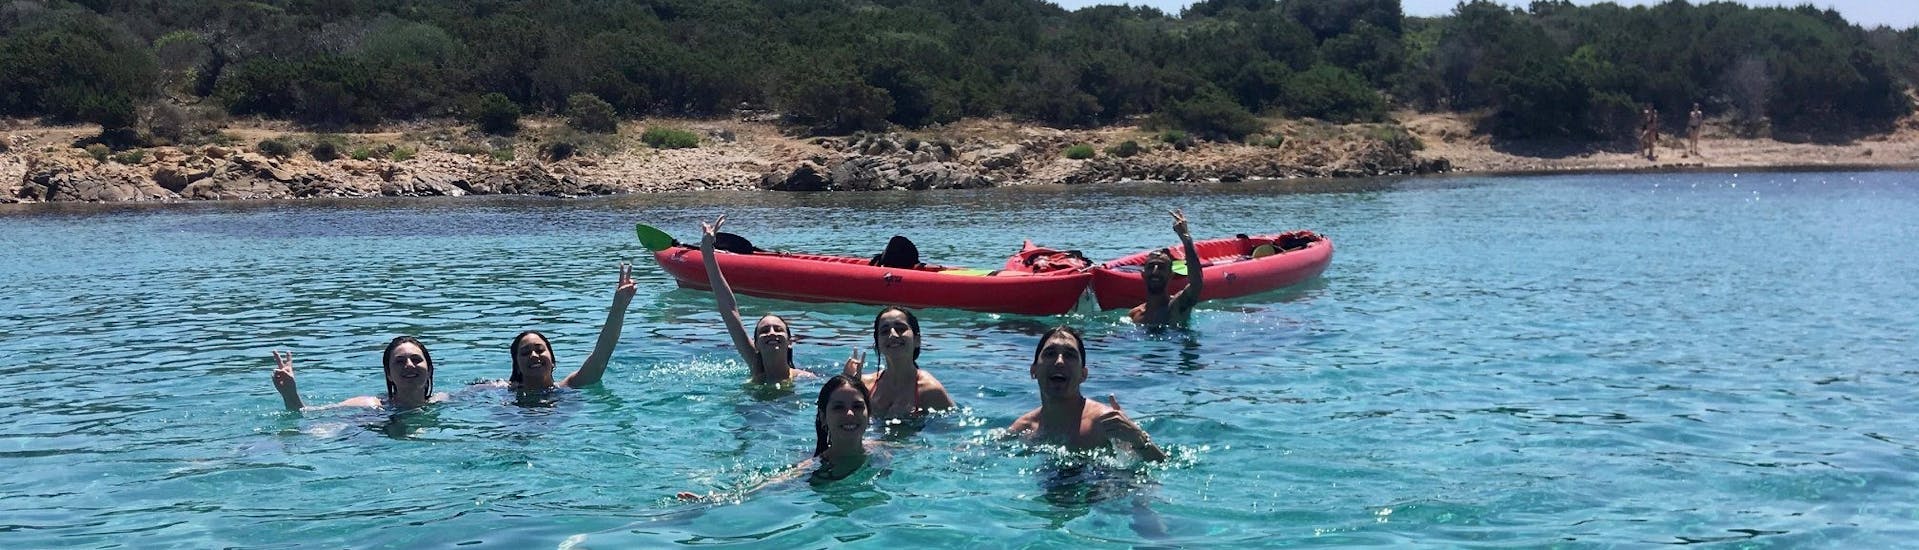 People on kayaks and snorkeling during the Morning Kayak Tour to Proratora Island with Snorkeling with Ecosport Sardinia.